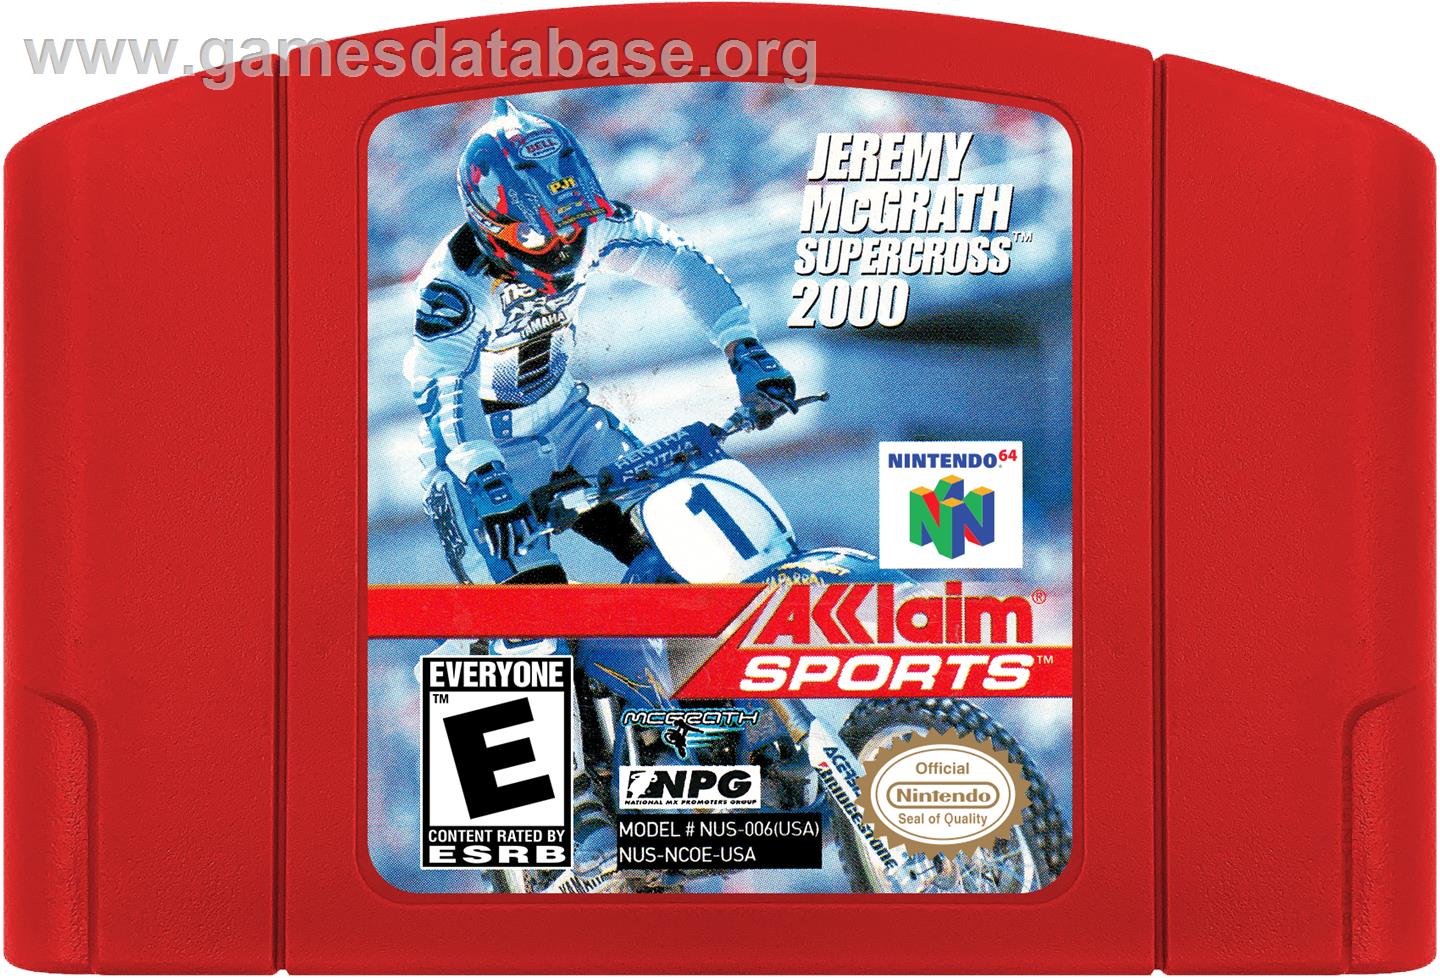 Jeremy McGrath Supercross 2000 - Nintendo N64 - Artwork - Cartridge